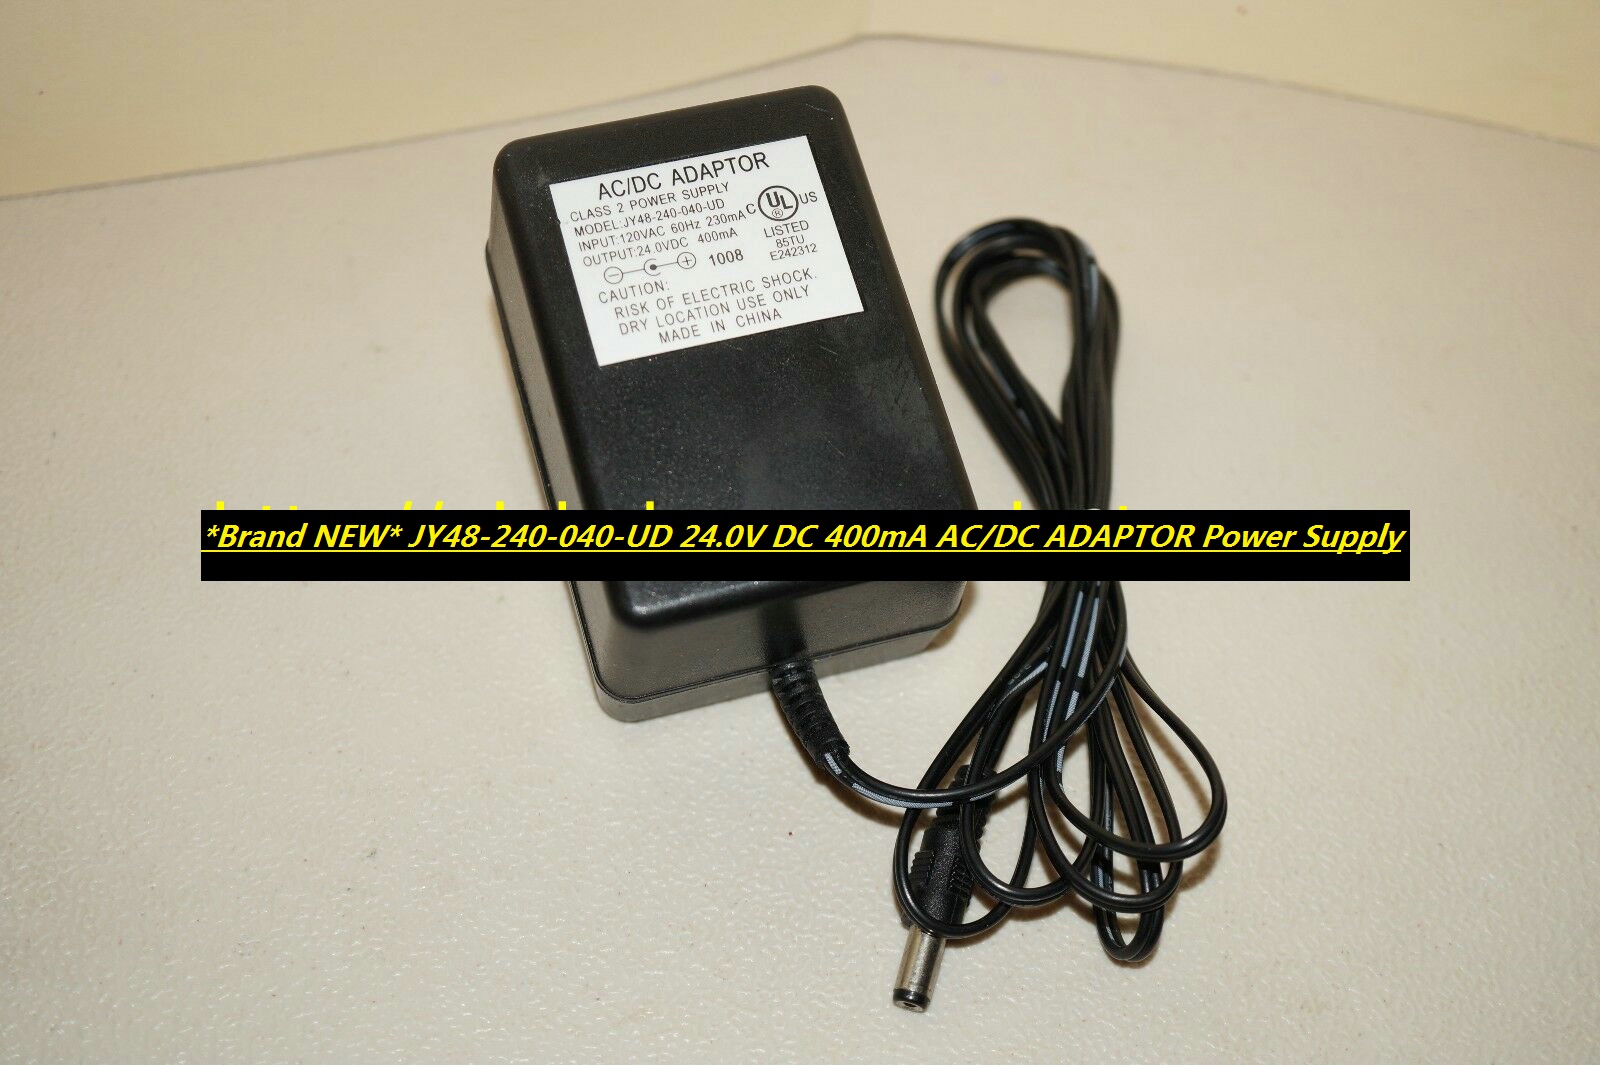 *Brand NEW* JY48-240-040-UD 24.0V DC 400mA AC/DC ADAPTOR Power Supply